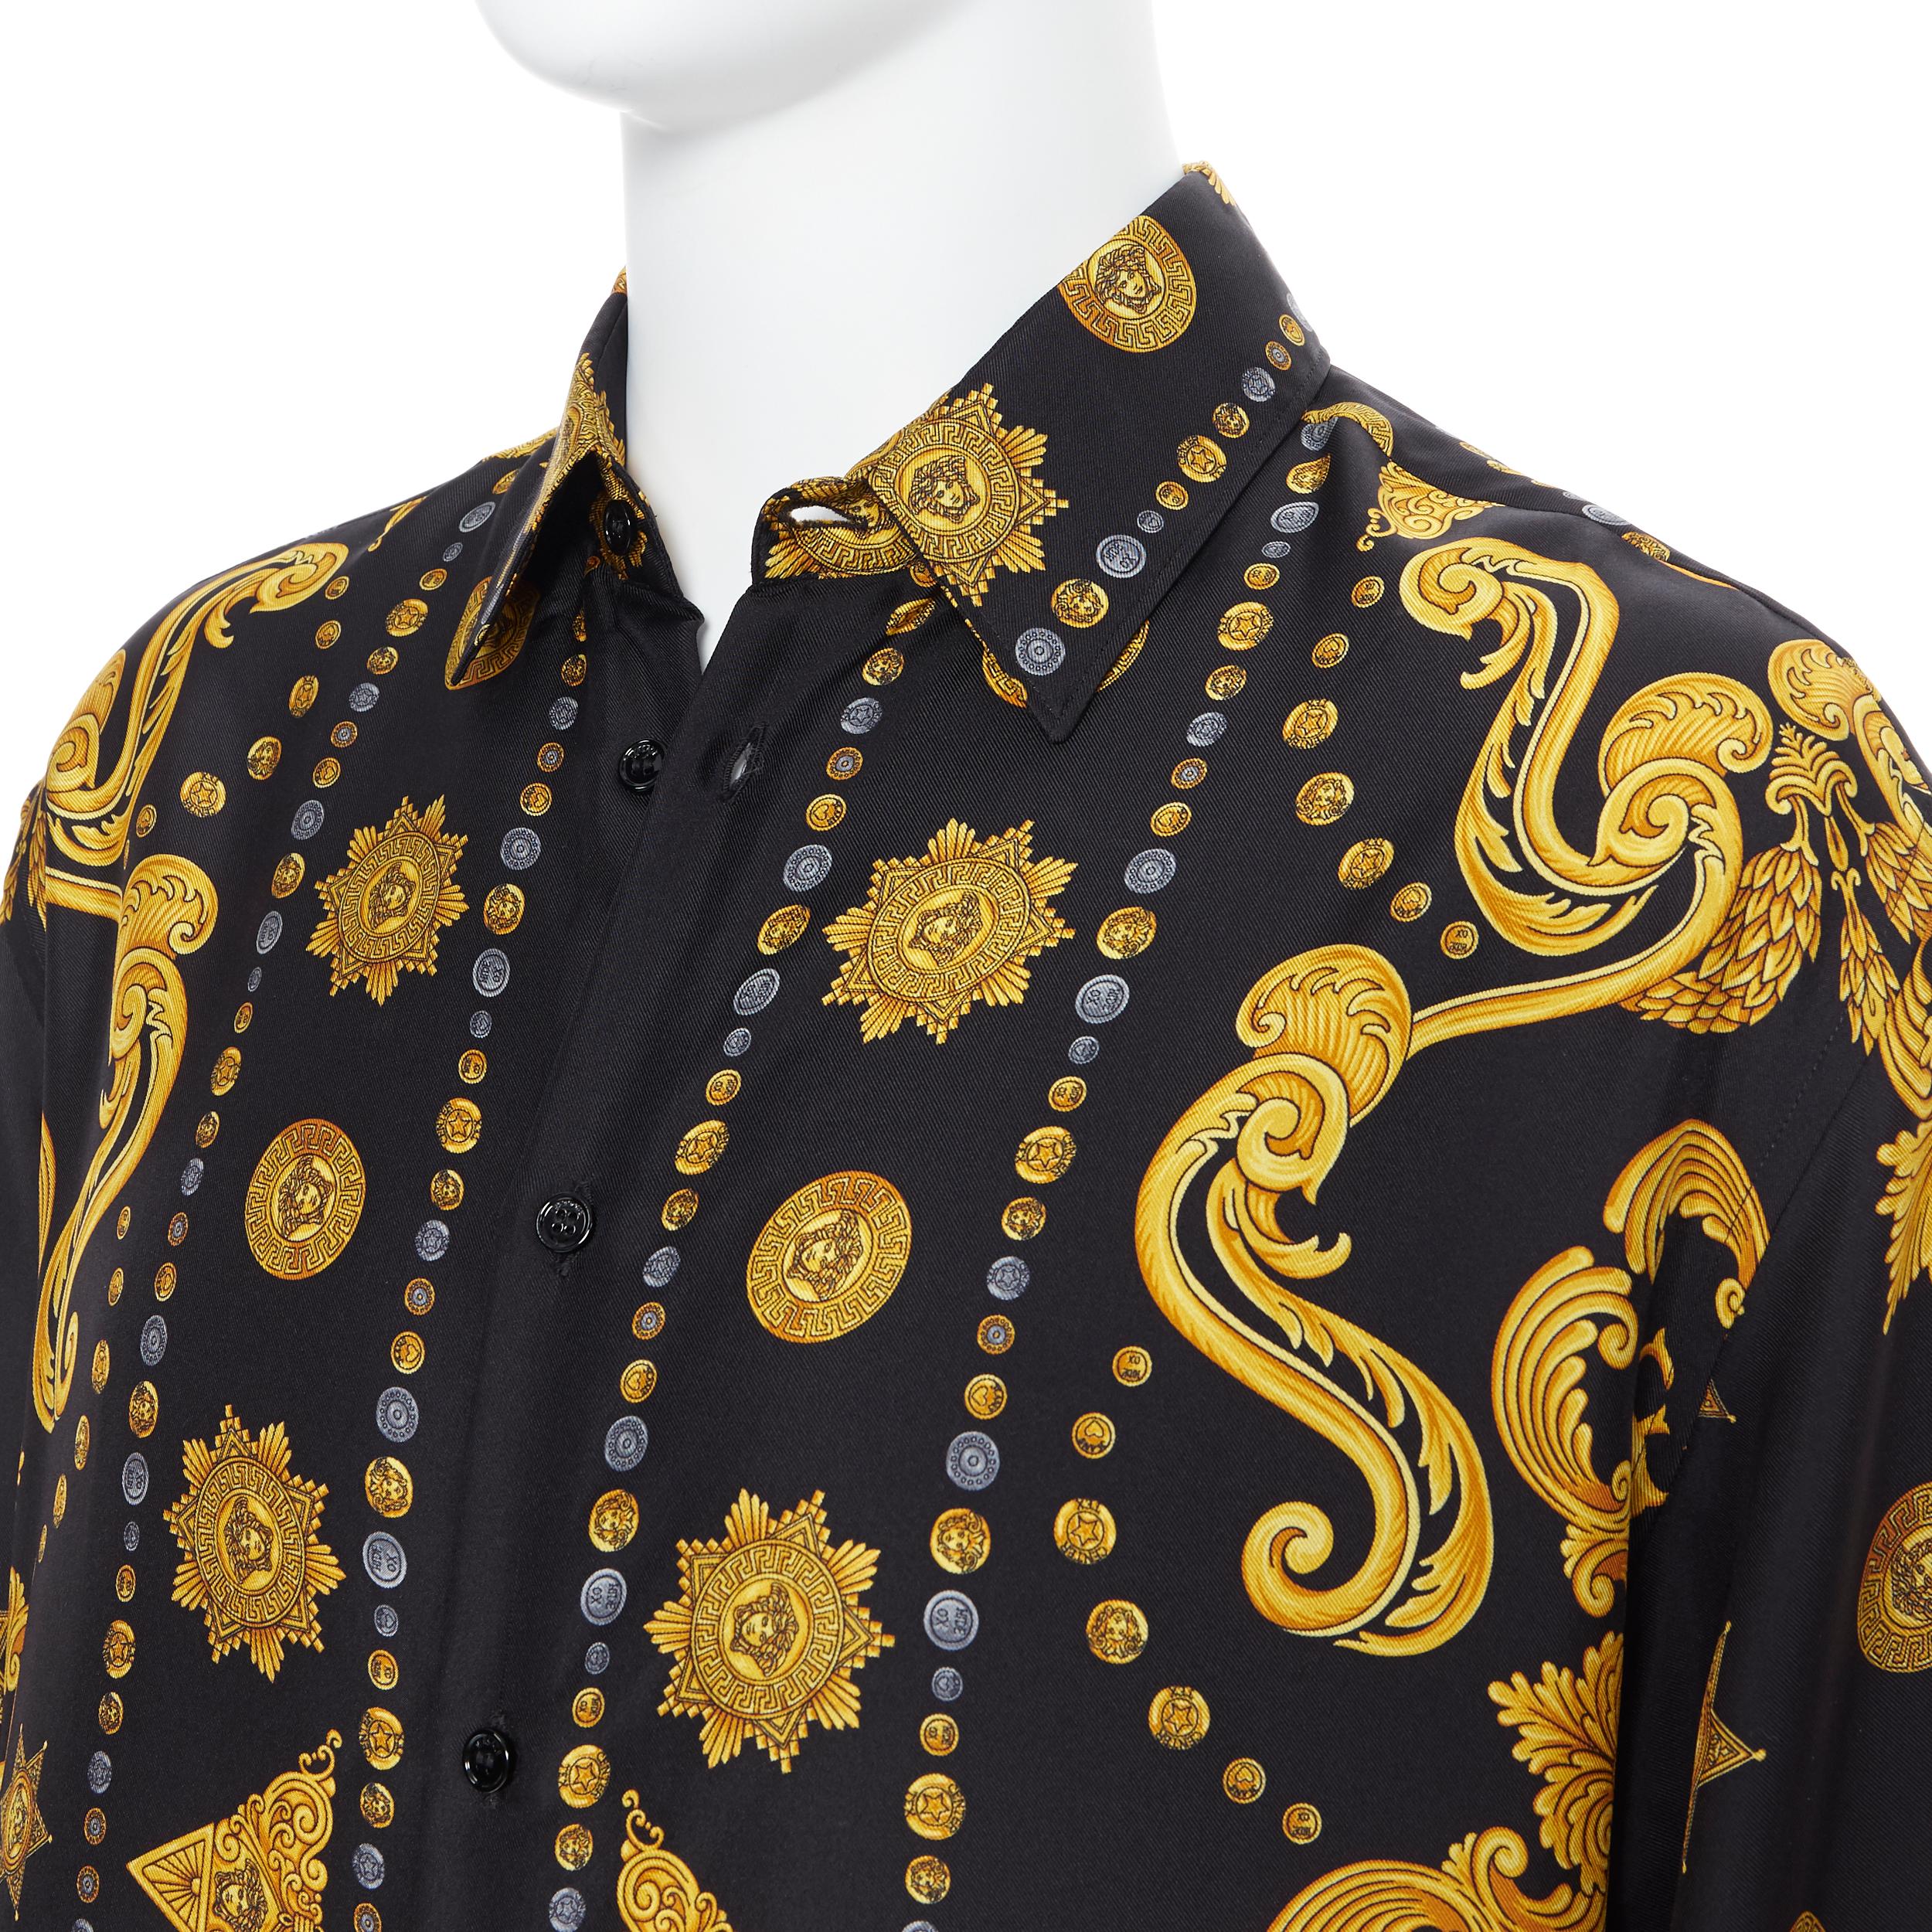 Men's new VERSACE black gold Medusa coin western star baroque print silk shirt EU41 L